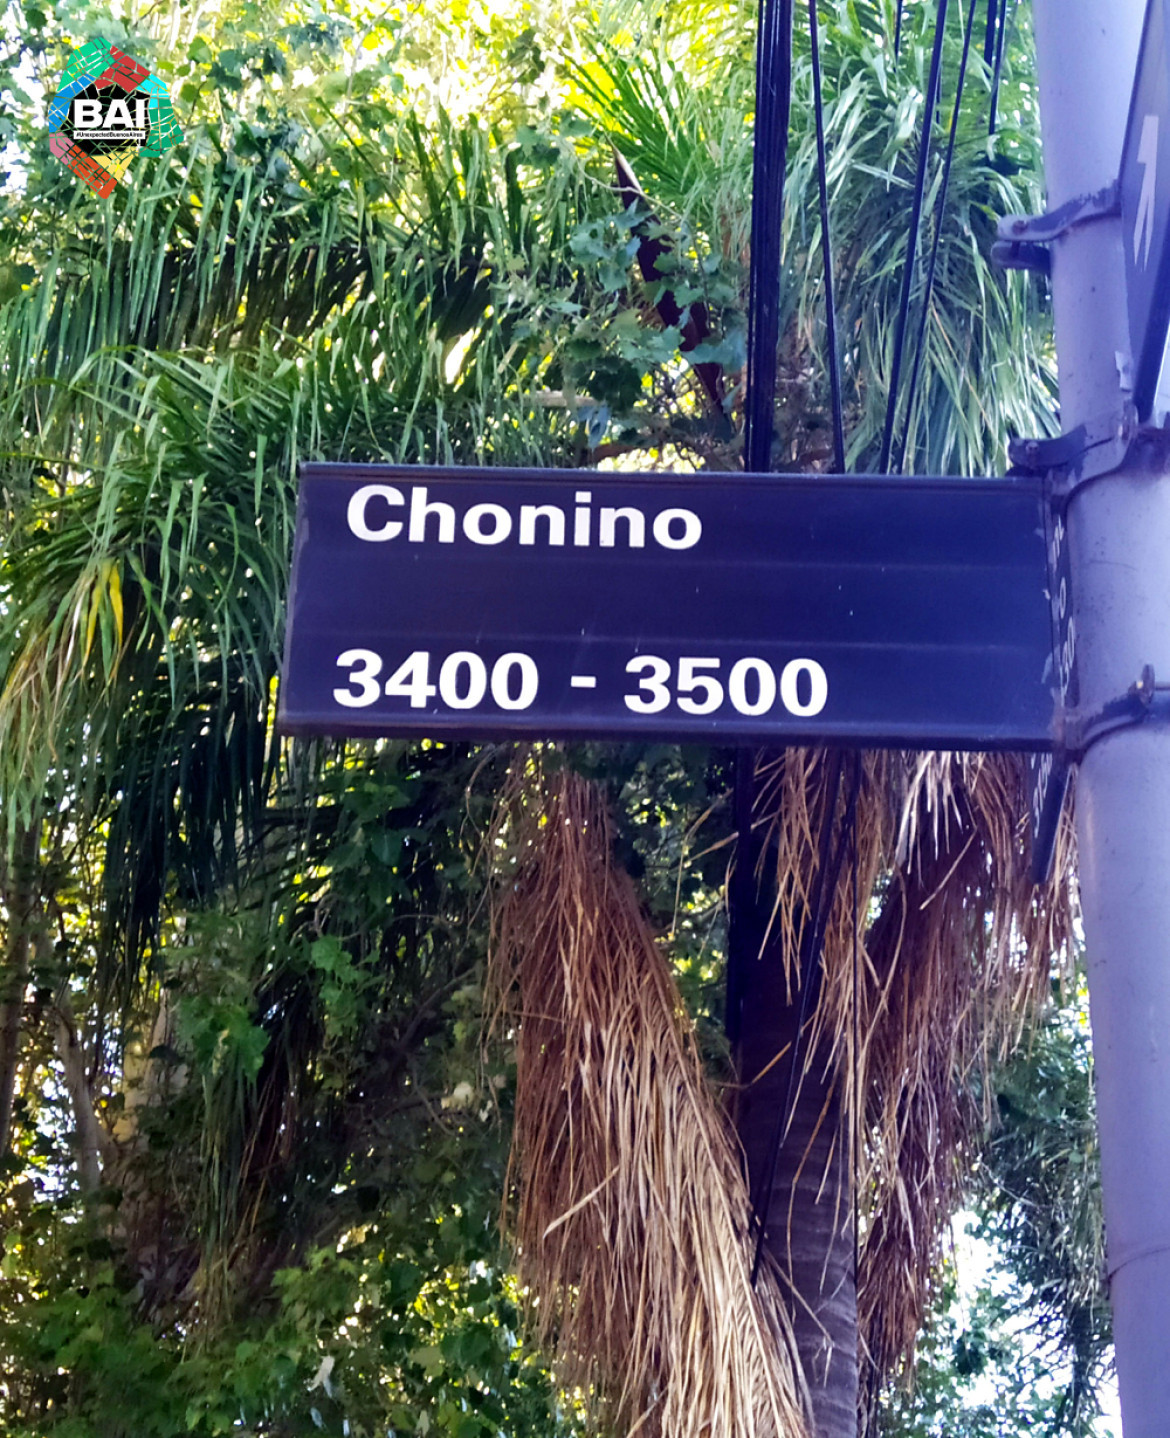 La calle en nombre de Chonino. Foto: Twitter/bainesperada.